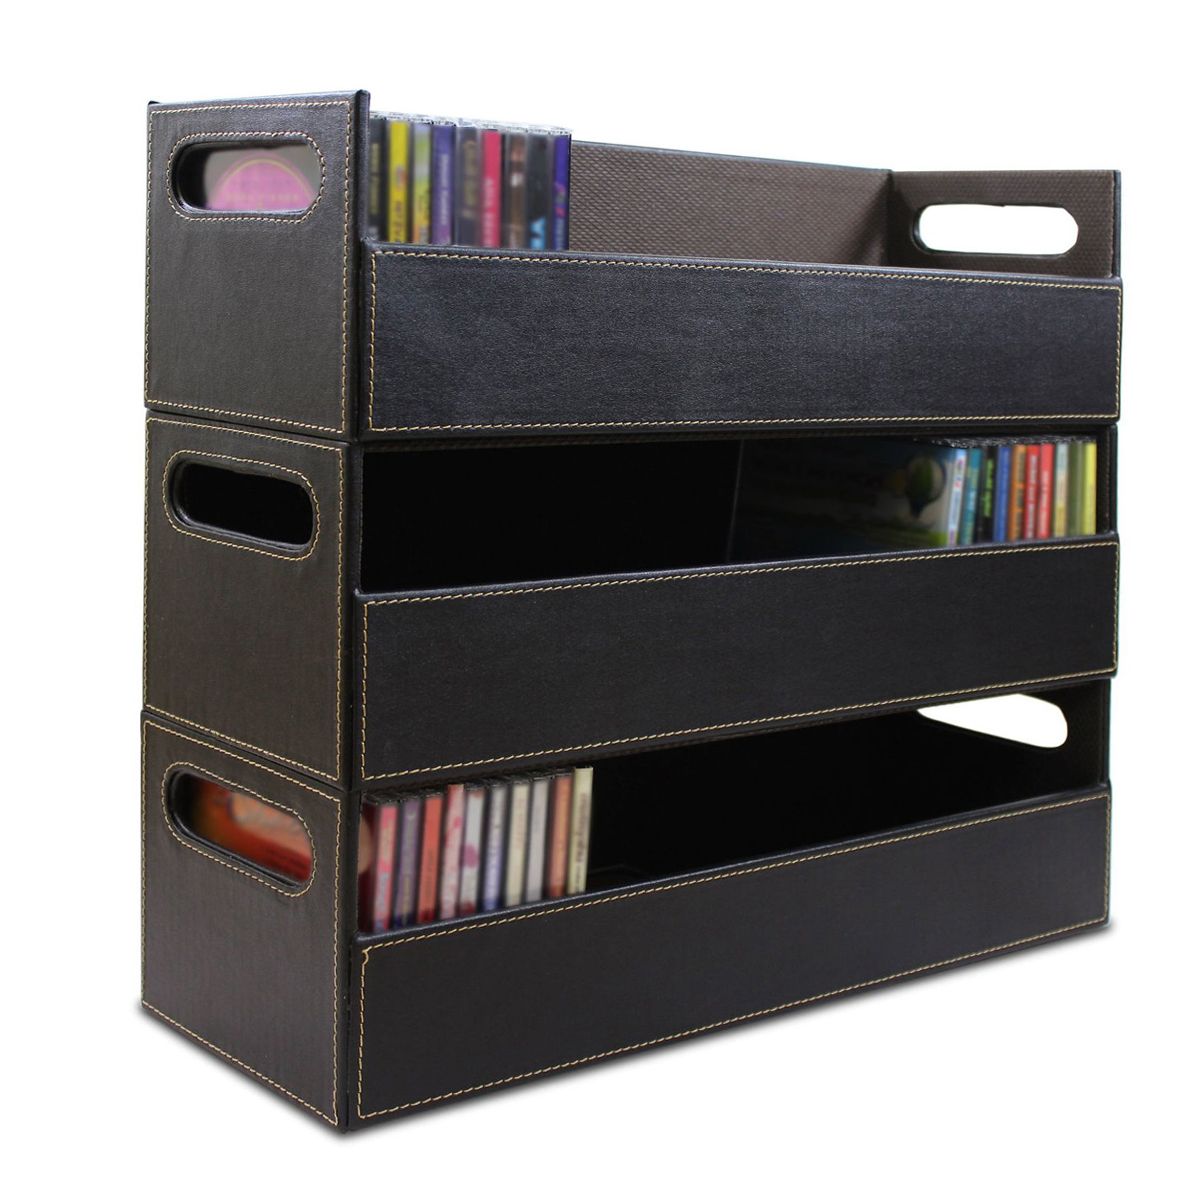 CD-DVD-Disk-Storage-Box-Case-Rack-Holder-Stacking-Tray-Shelf-Space-Organizer-1126834